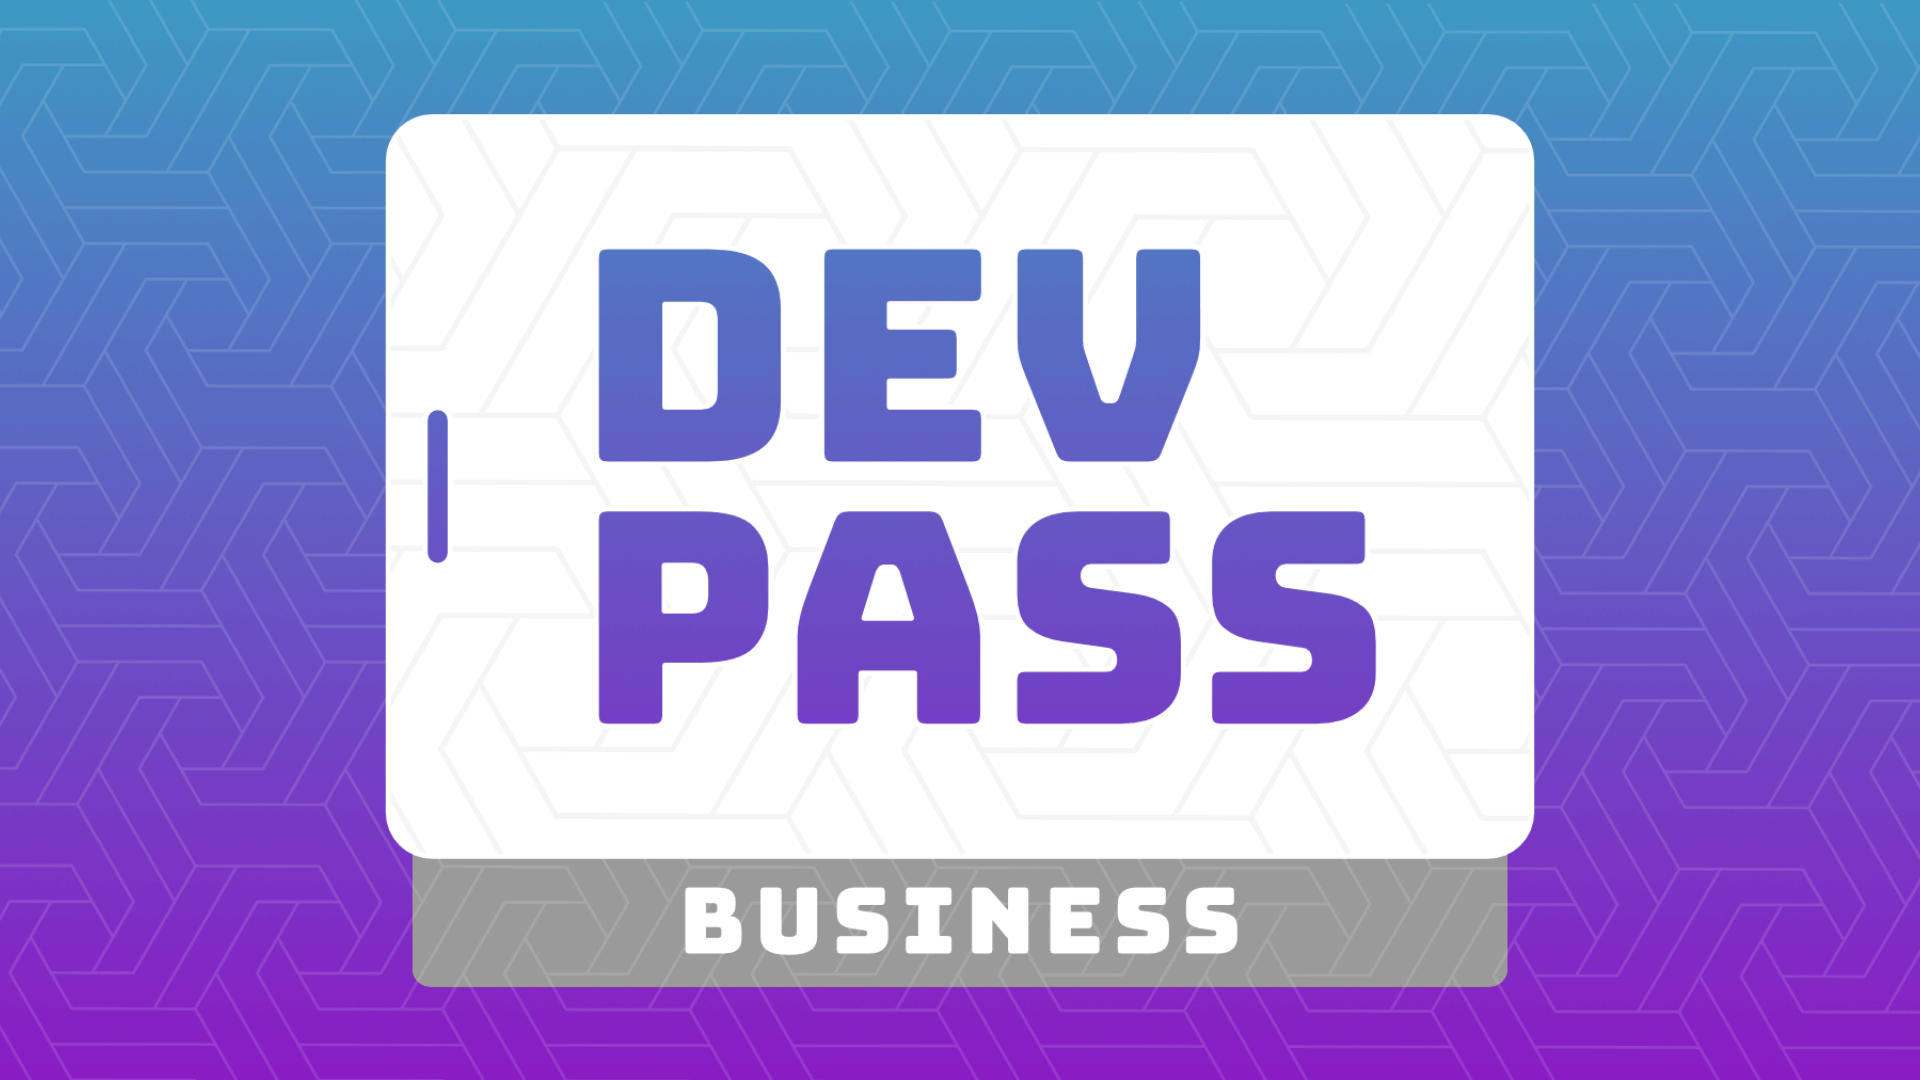 DevPass Business Overview Card Image